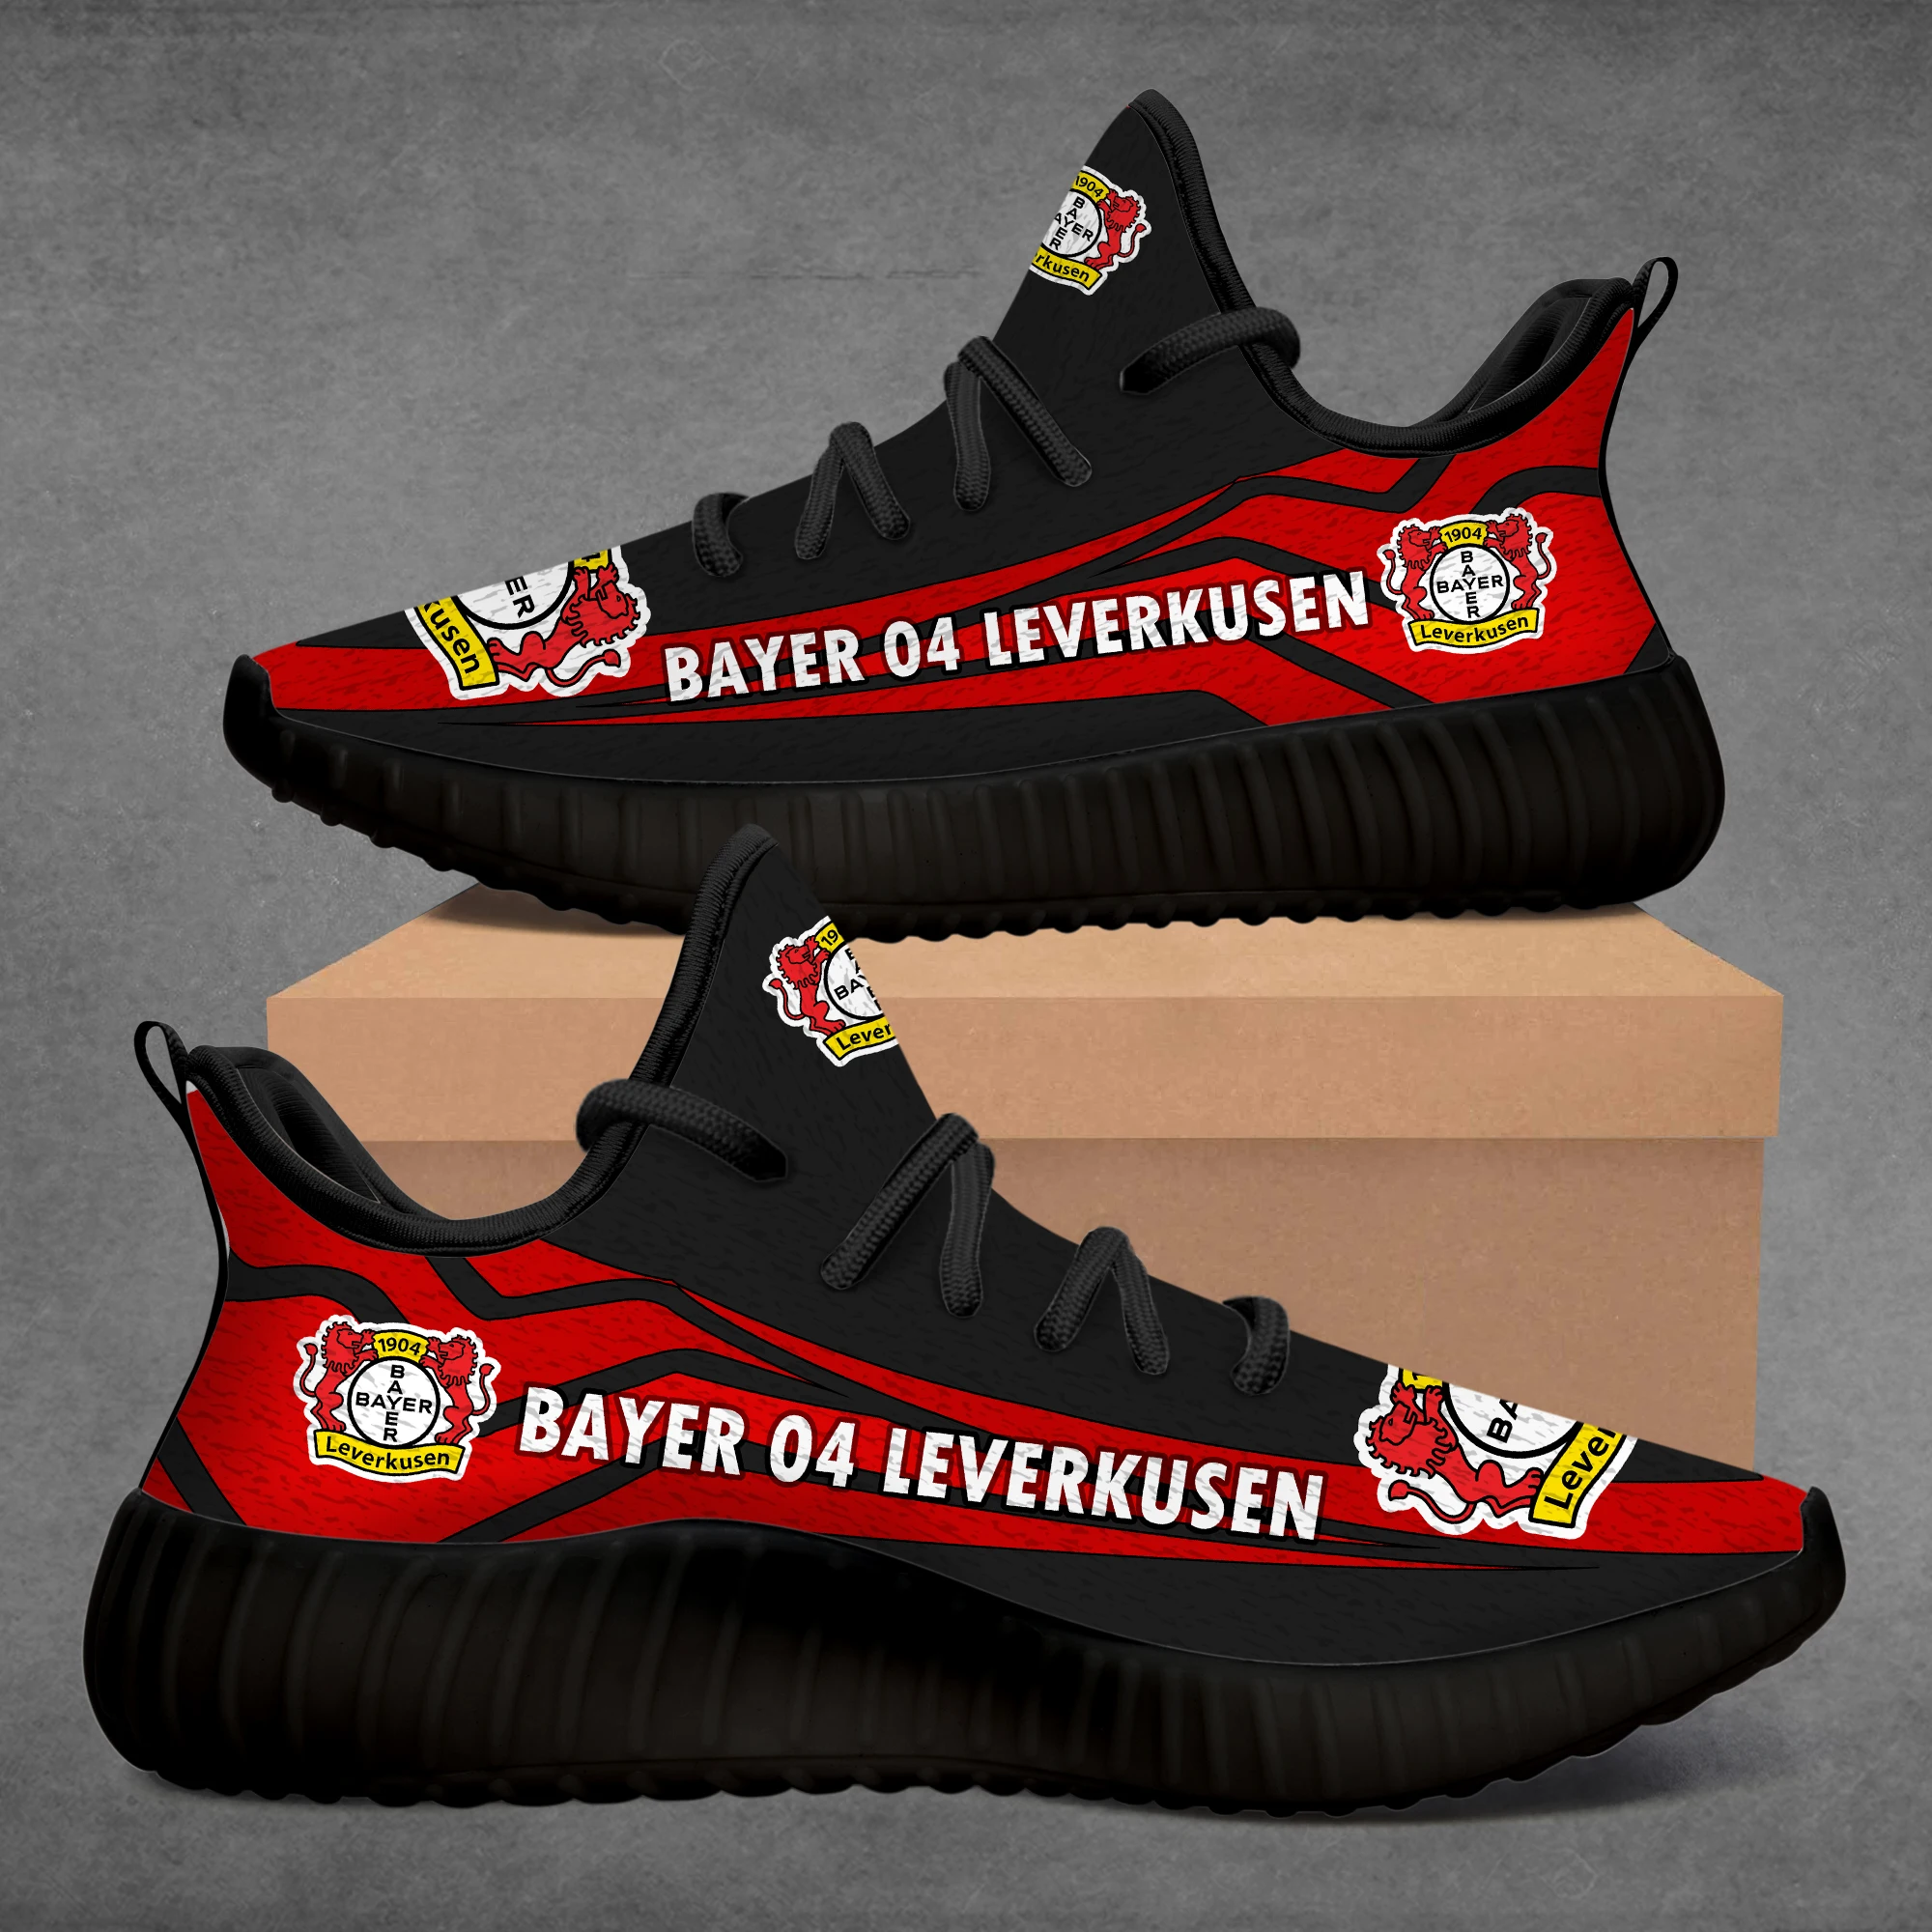 

Custom 350 Bayer-04-Leverkusen Hot Light Running Comfortable Casual Men's Sneaker Breathable Outdoor Walking Men Sport Shoes